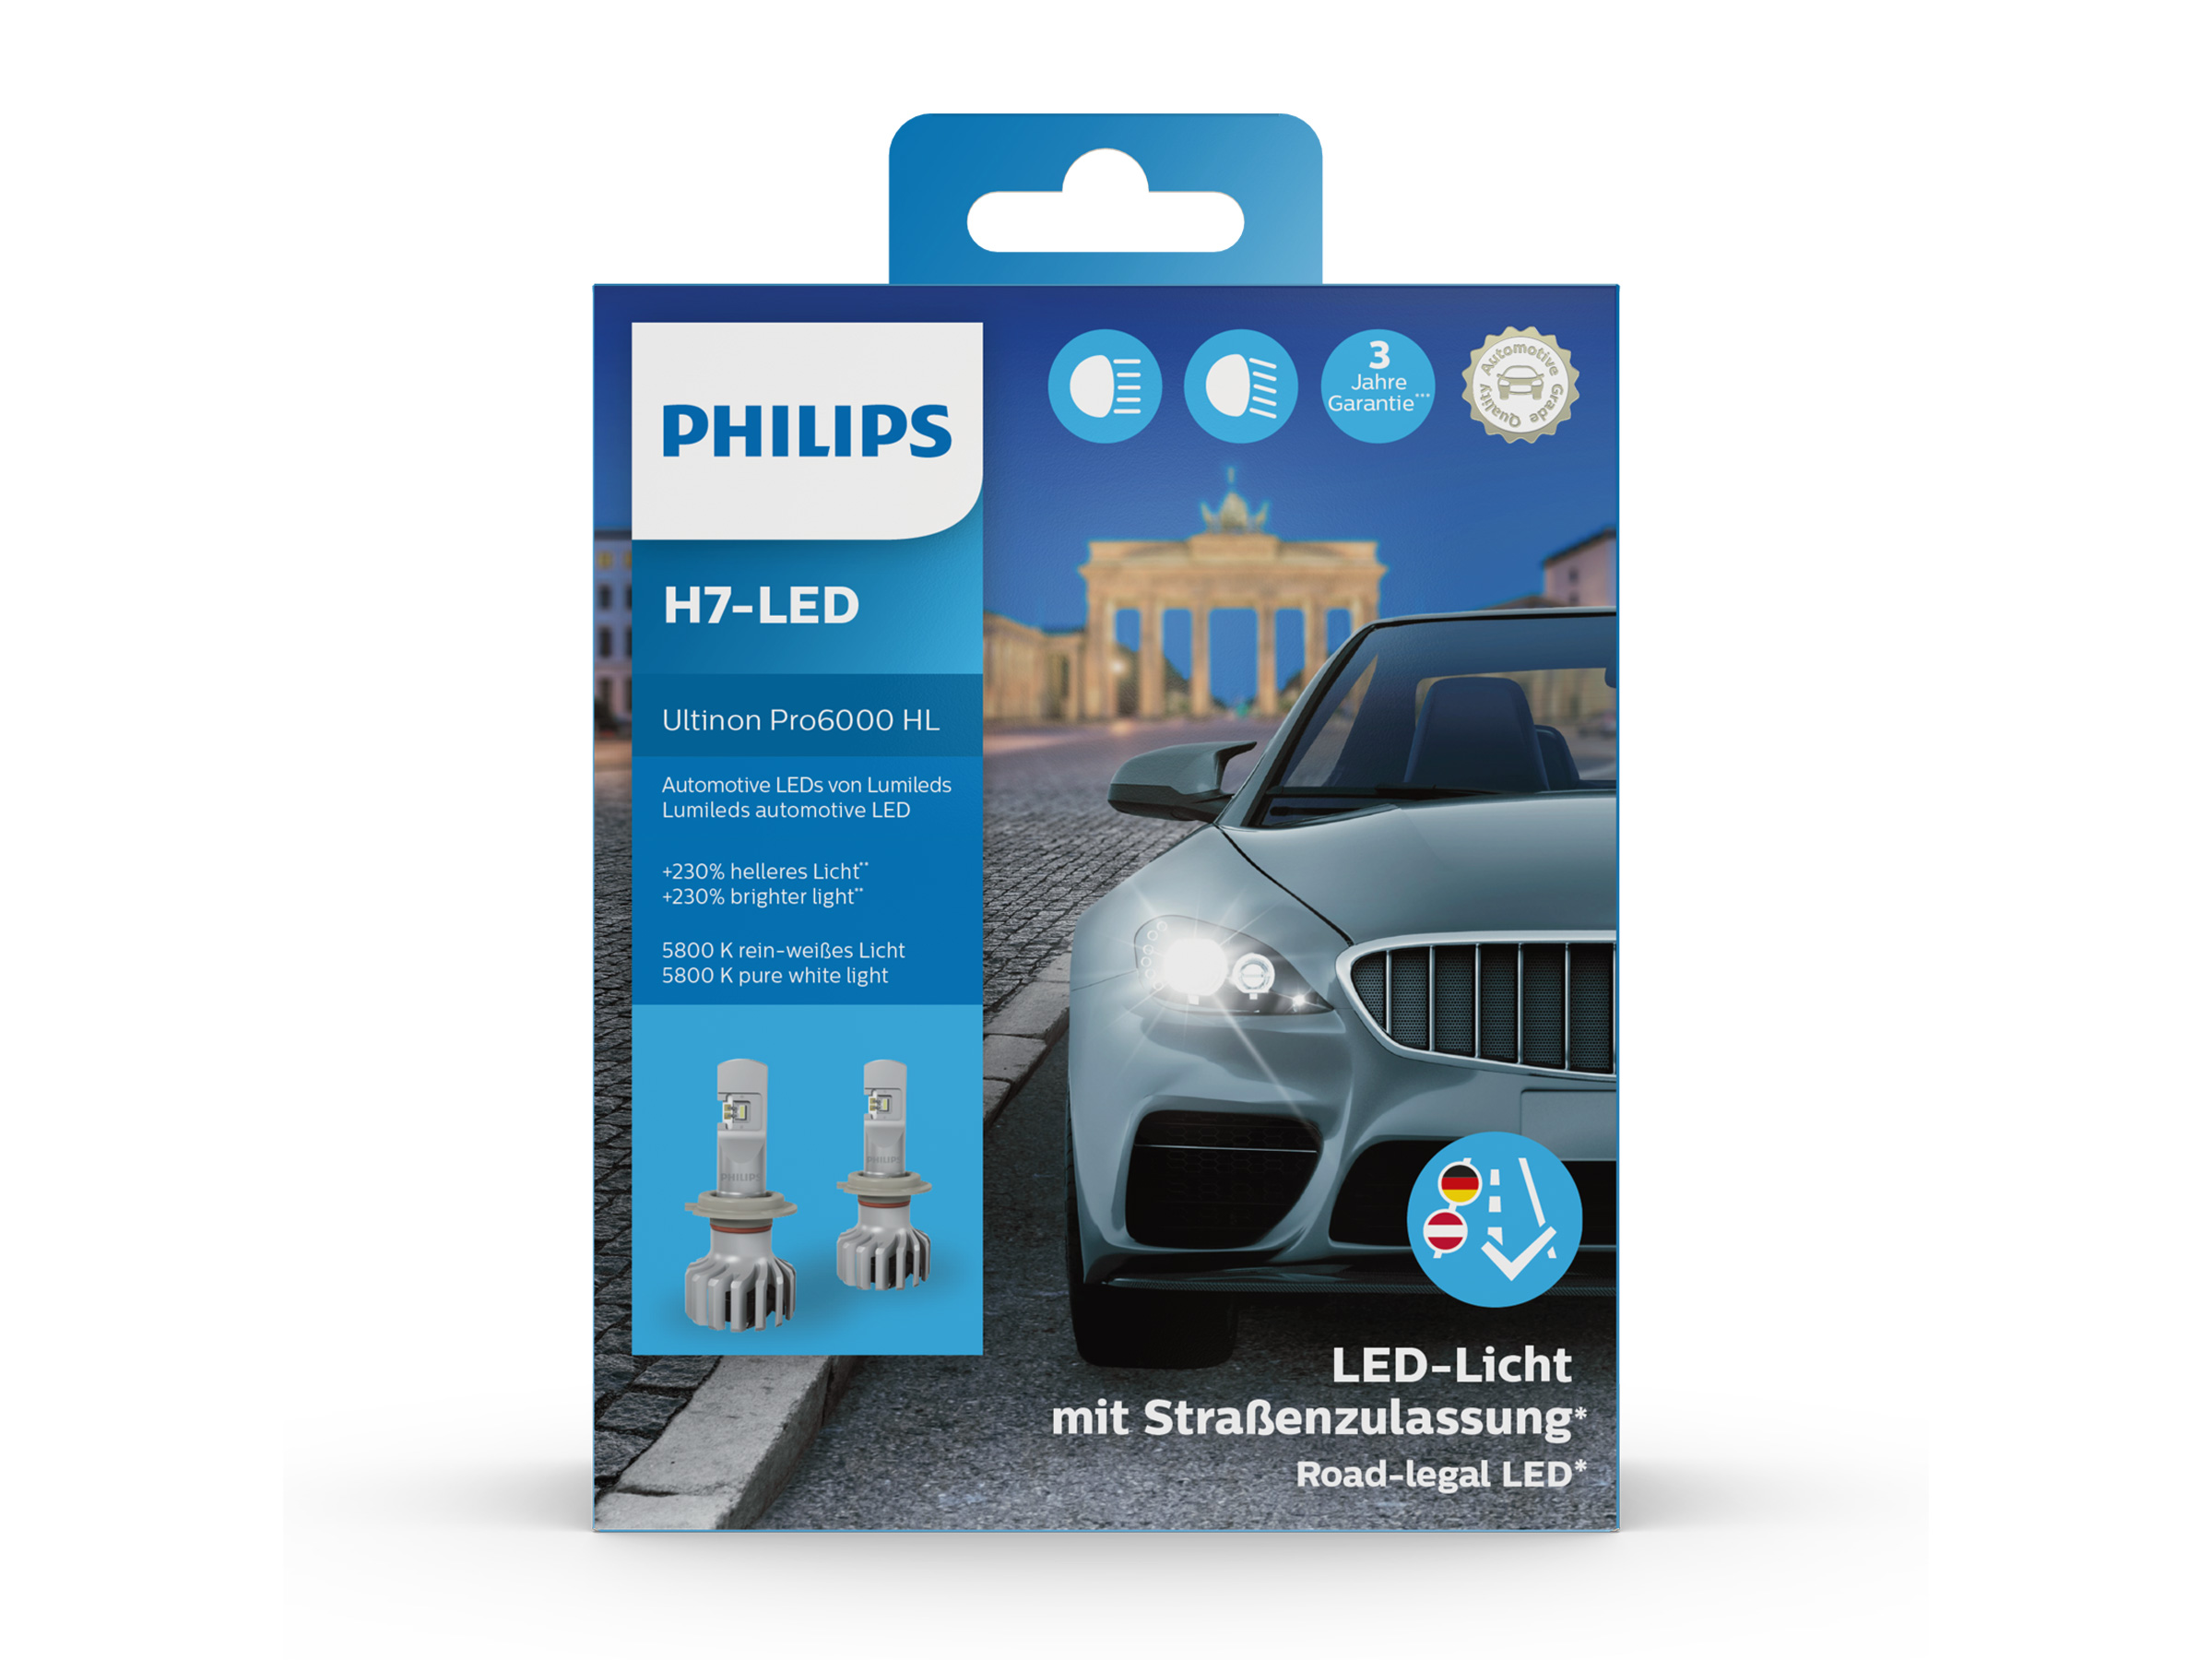 Philips Ultinon Pro6000 H7 LED Abblendlicht +230% Straßenzulassung